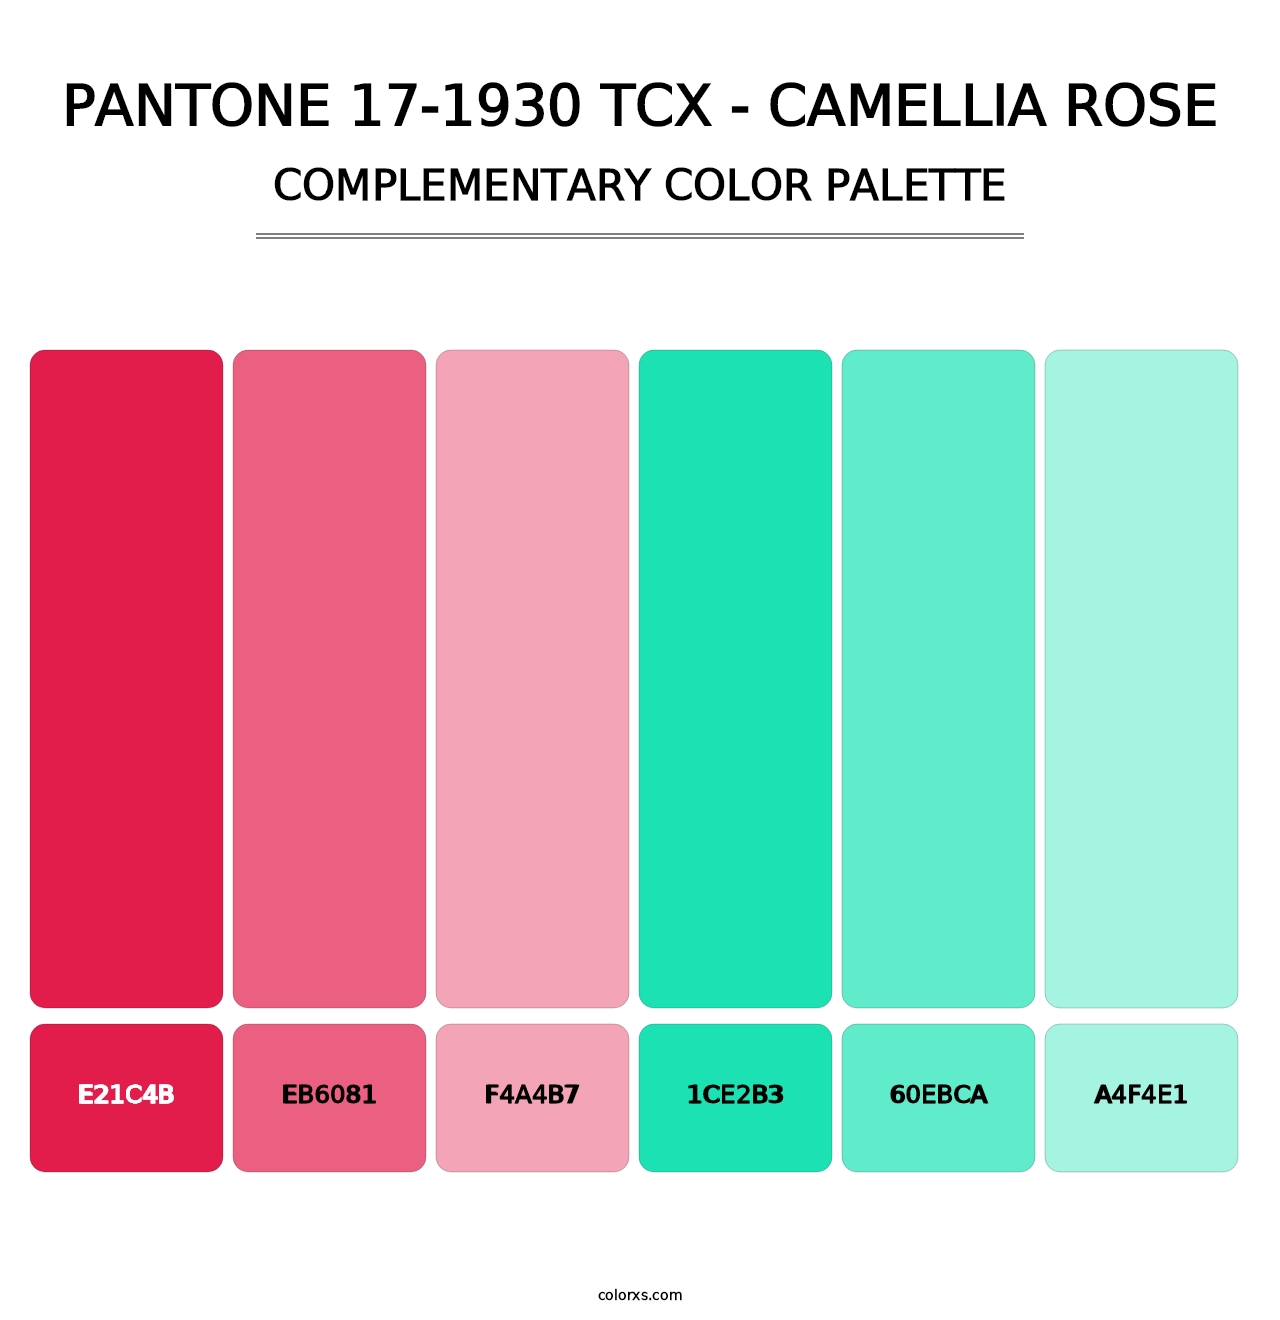 PANTONE 17-1930 TCX - Camellia Rose - Complementary Color Palette